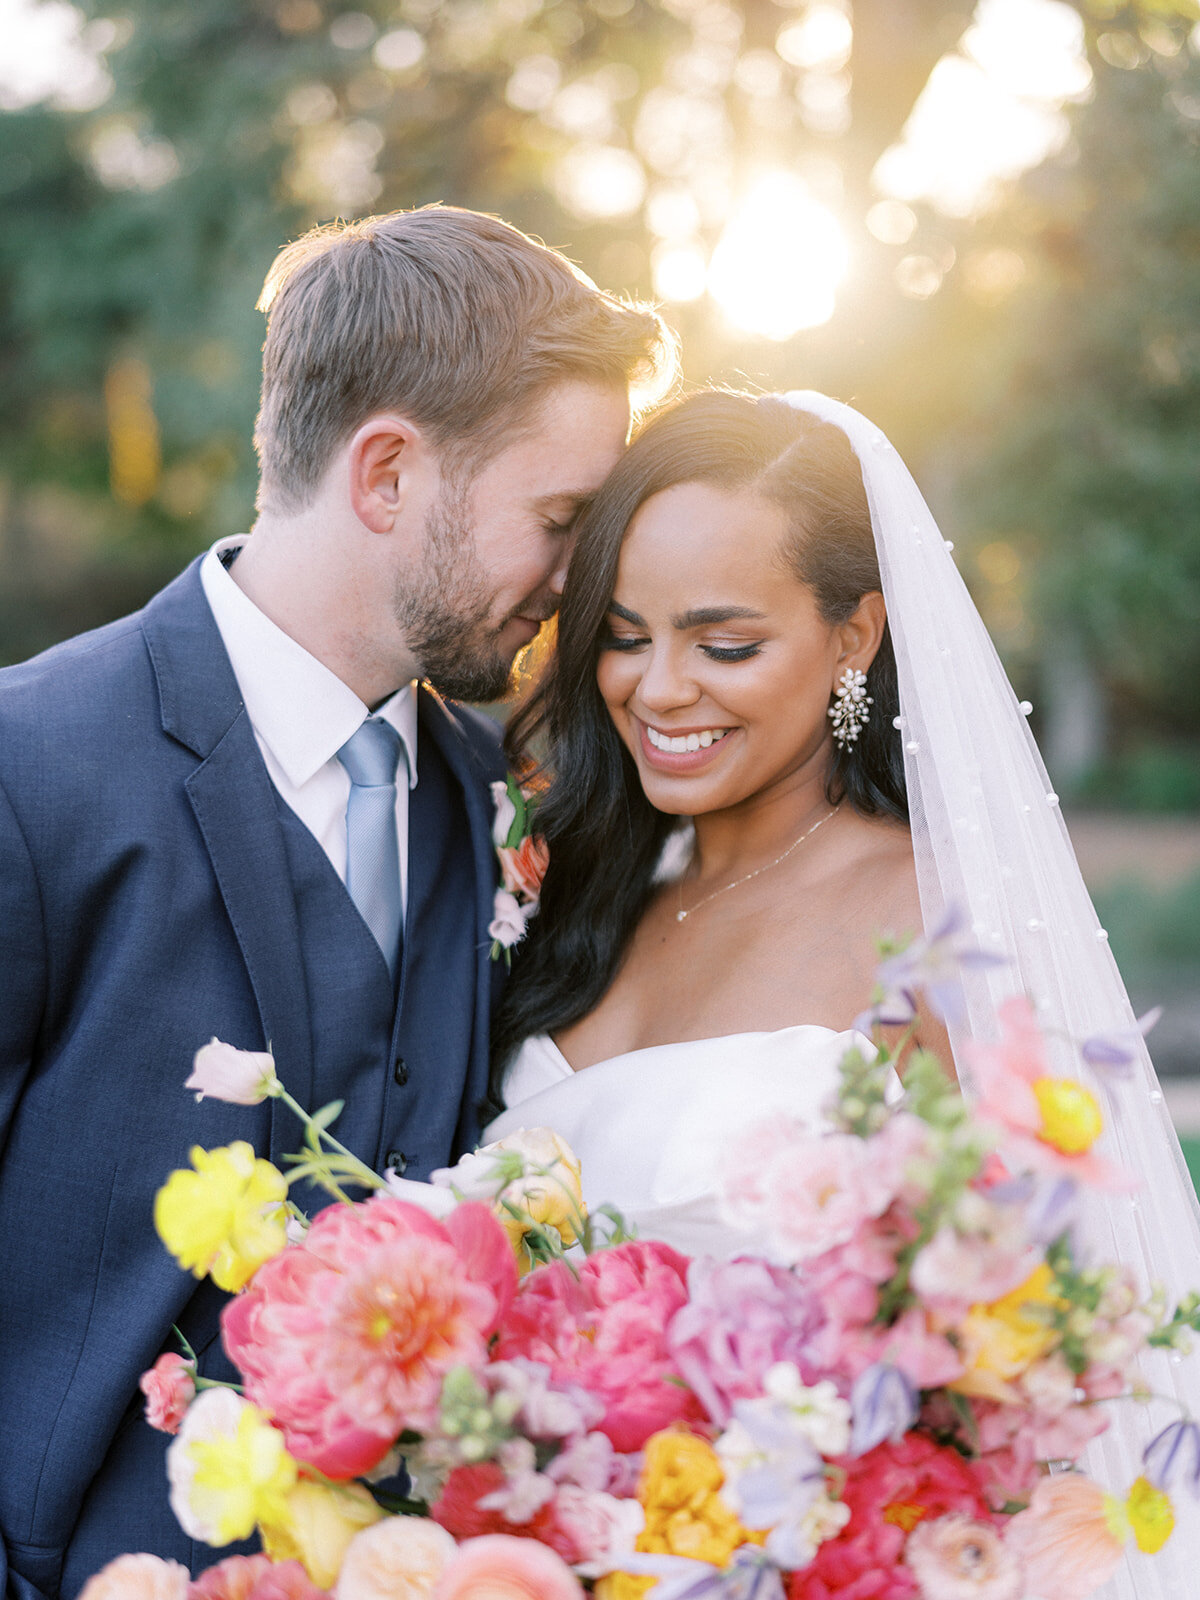 bride-and-groom-golden-hour-photos-caitlin-rose-photo